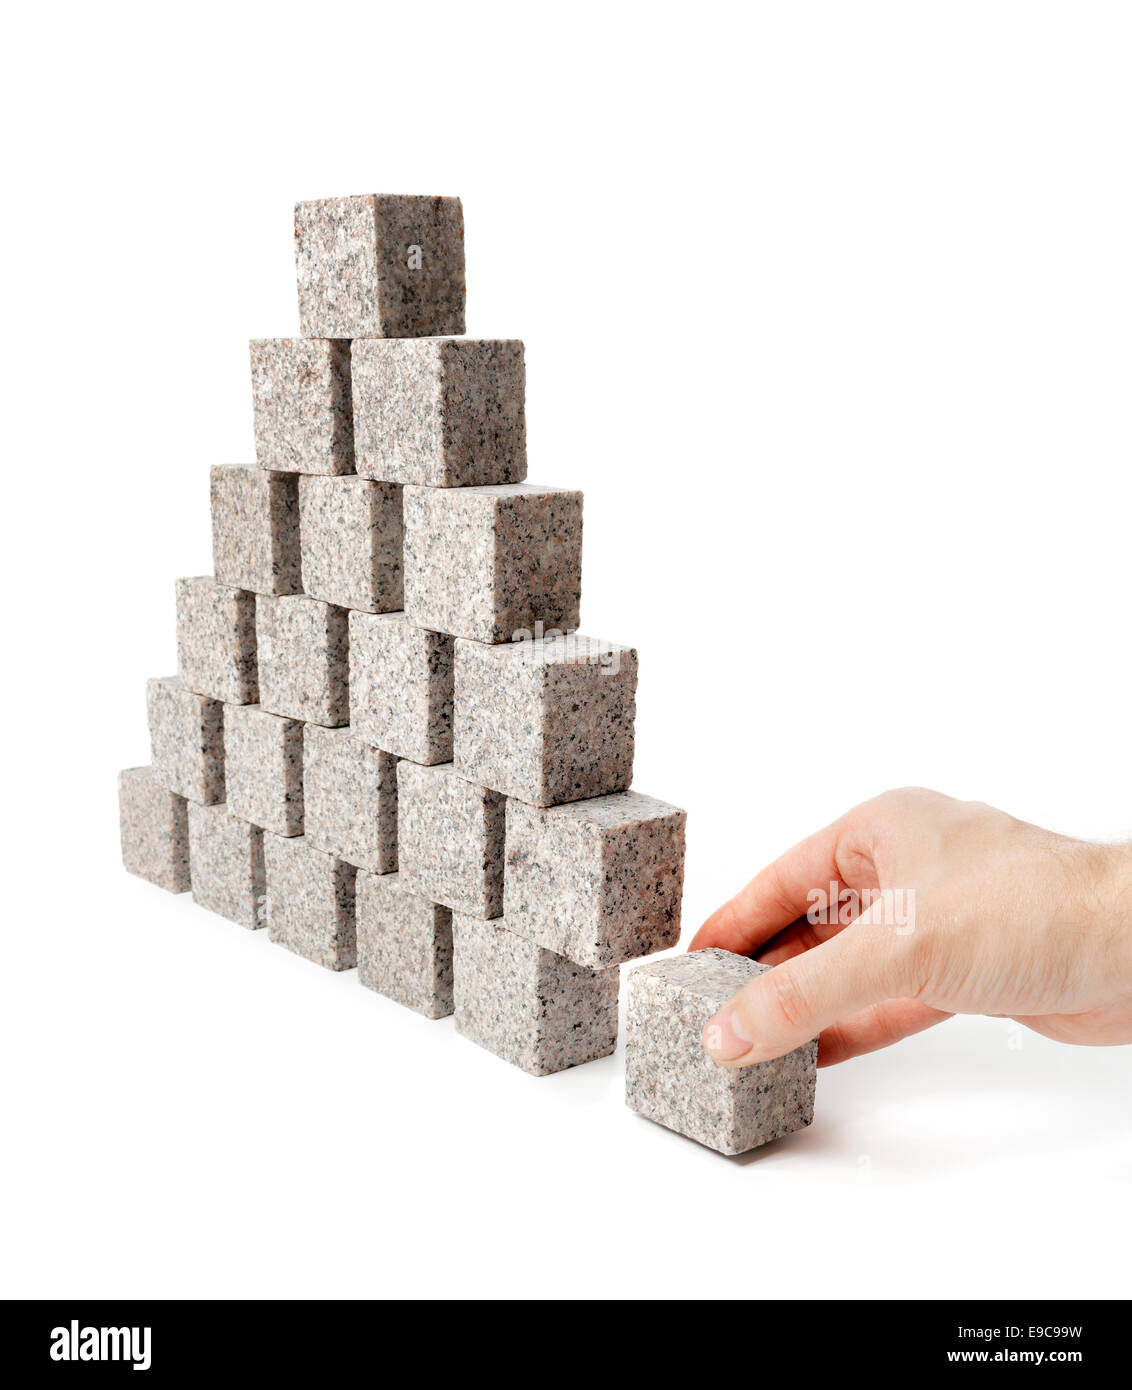 Hand removing the corner stone of a pyramid made of small granite rock blocks. Stock Photo